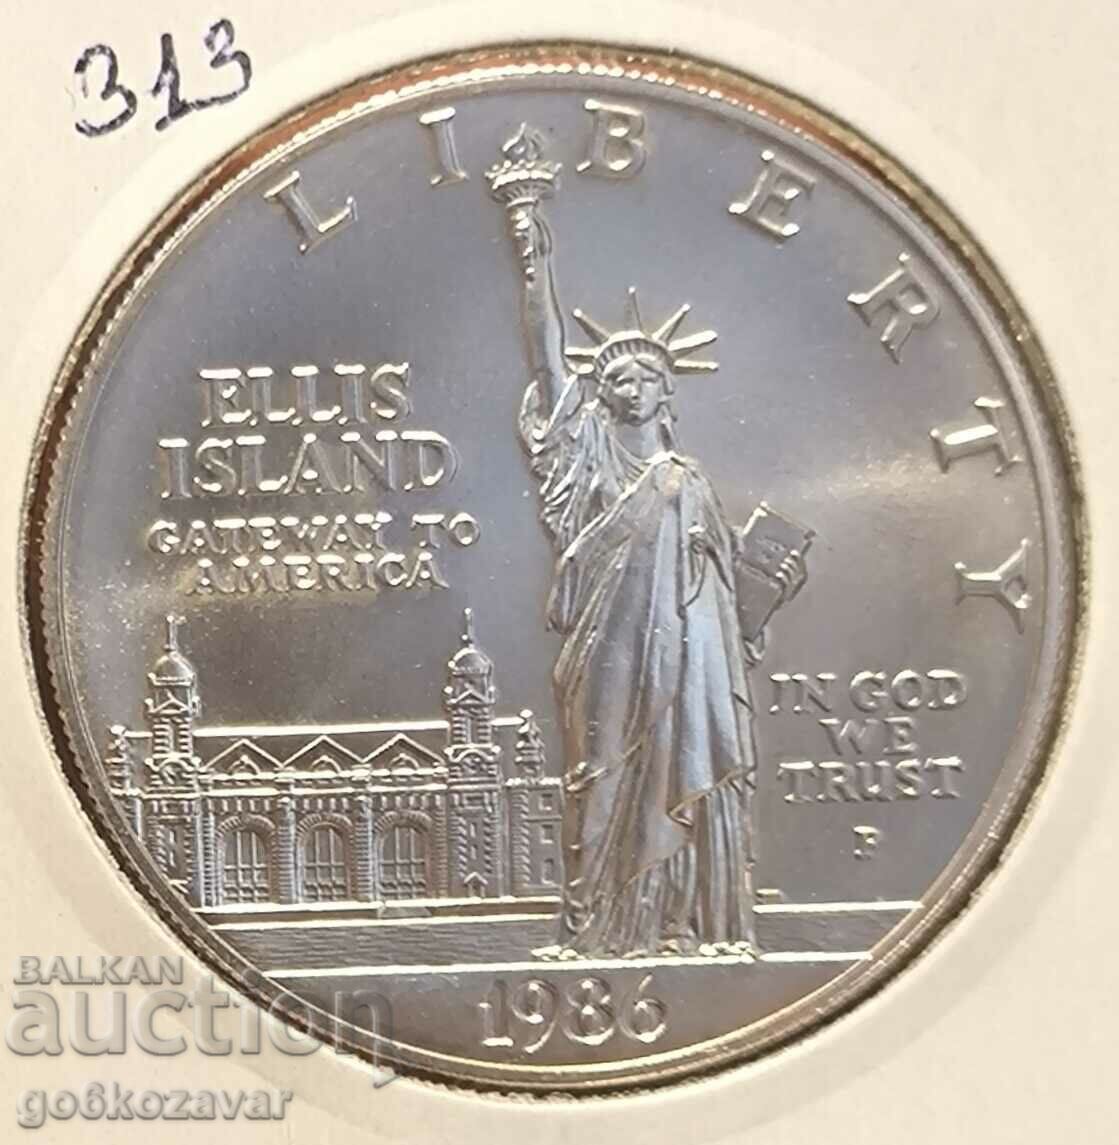 SUA 1 dolar 1986 argint, Philadelphia! ! UNC Rar!